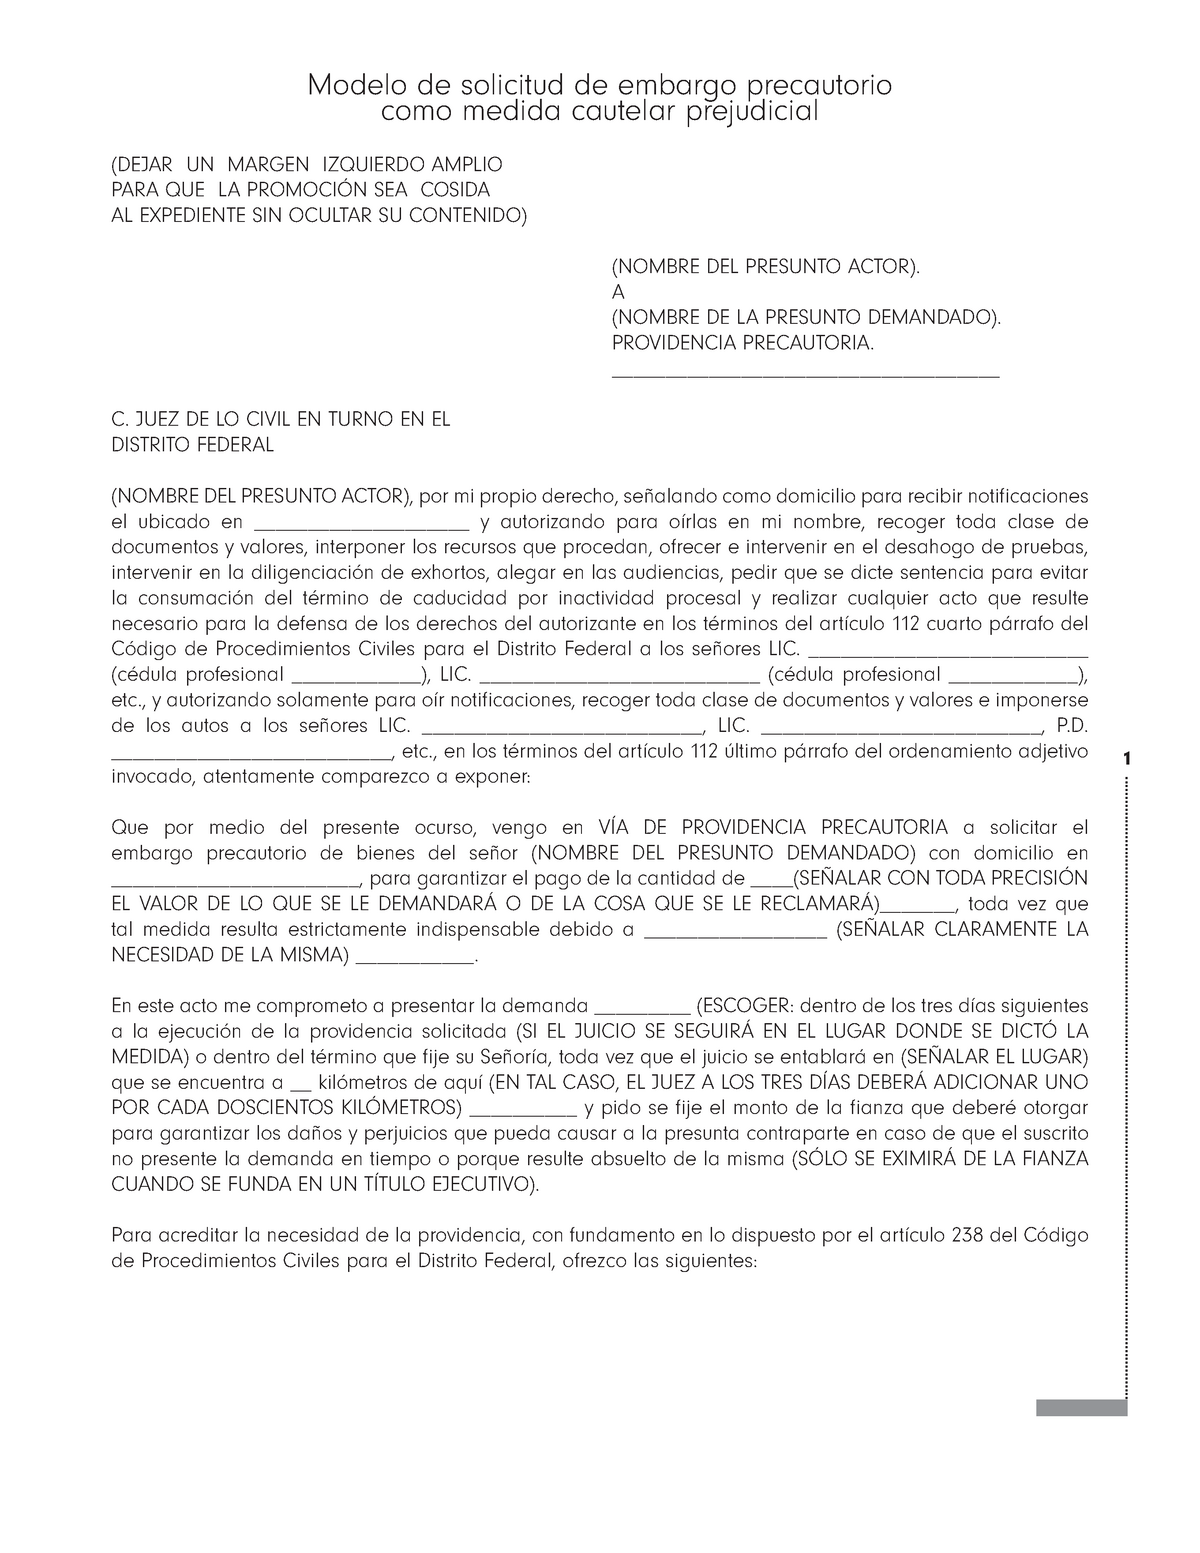 Modelo de solicitud de embargo precautorio como medida cautelar prejudicial  - A (NOMBRE DE LA - Studocu